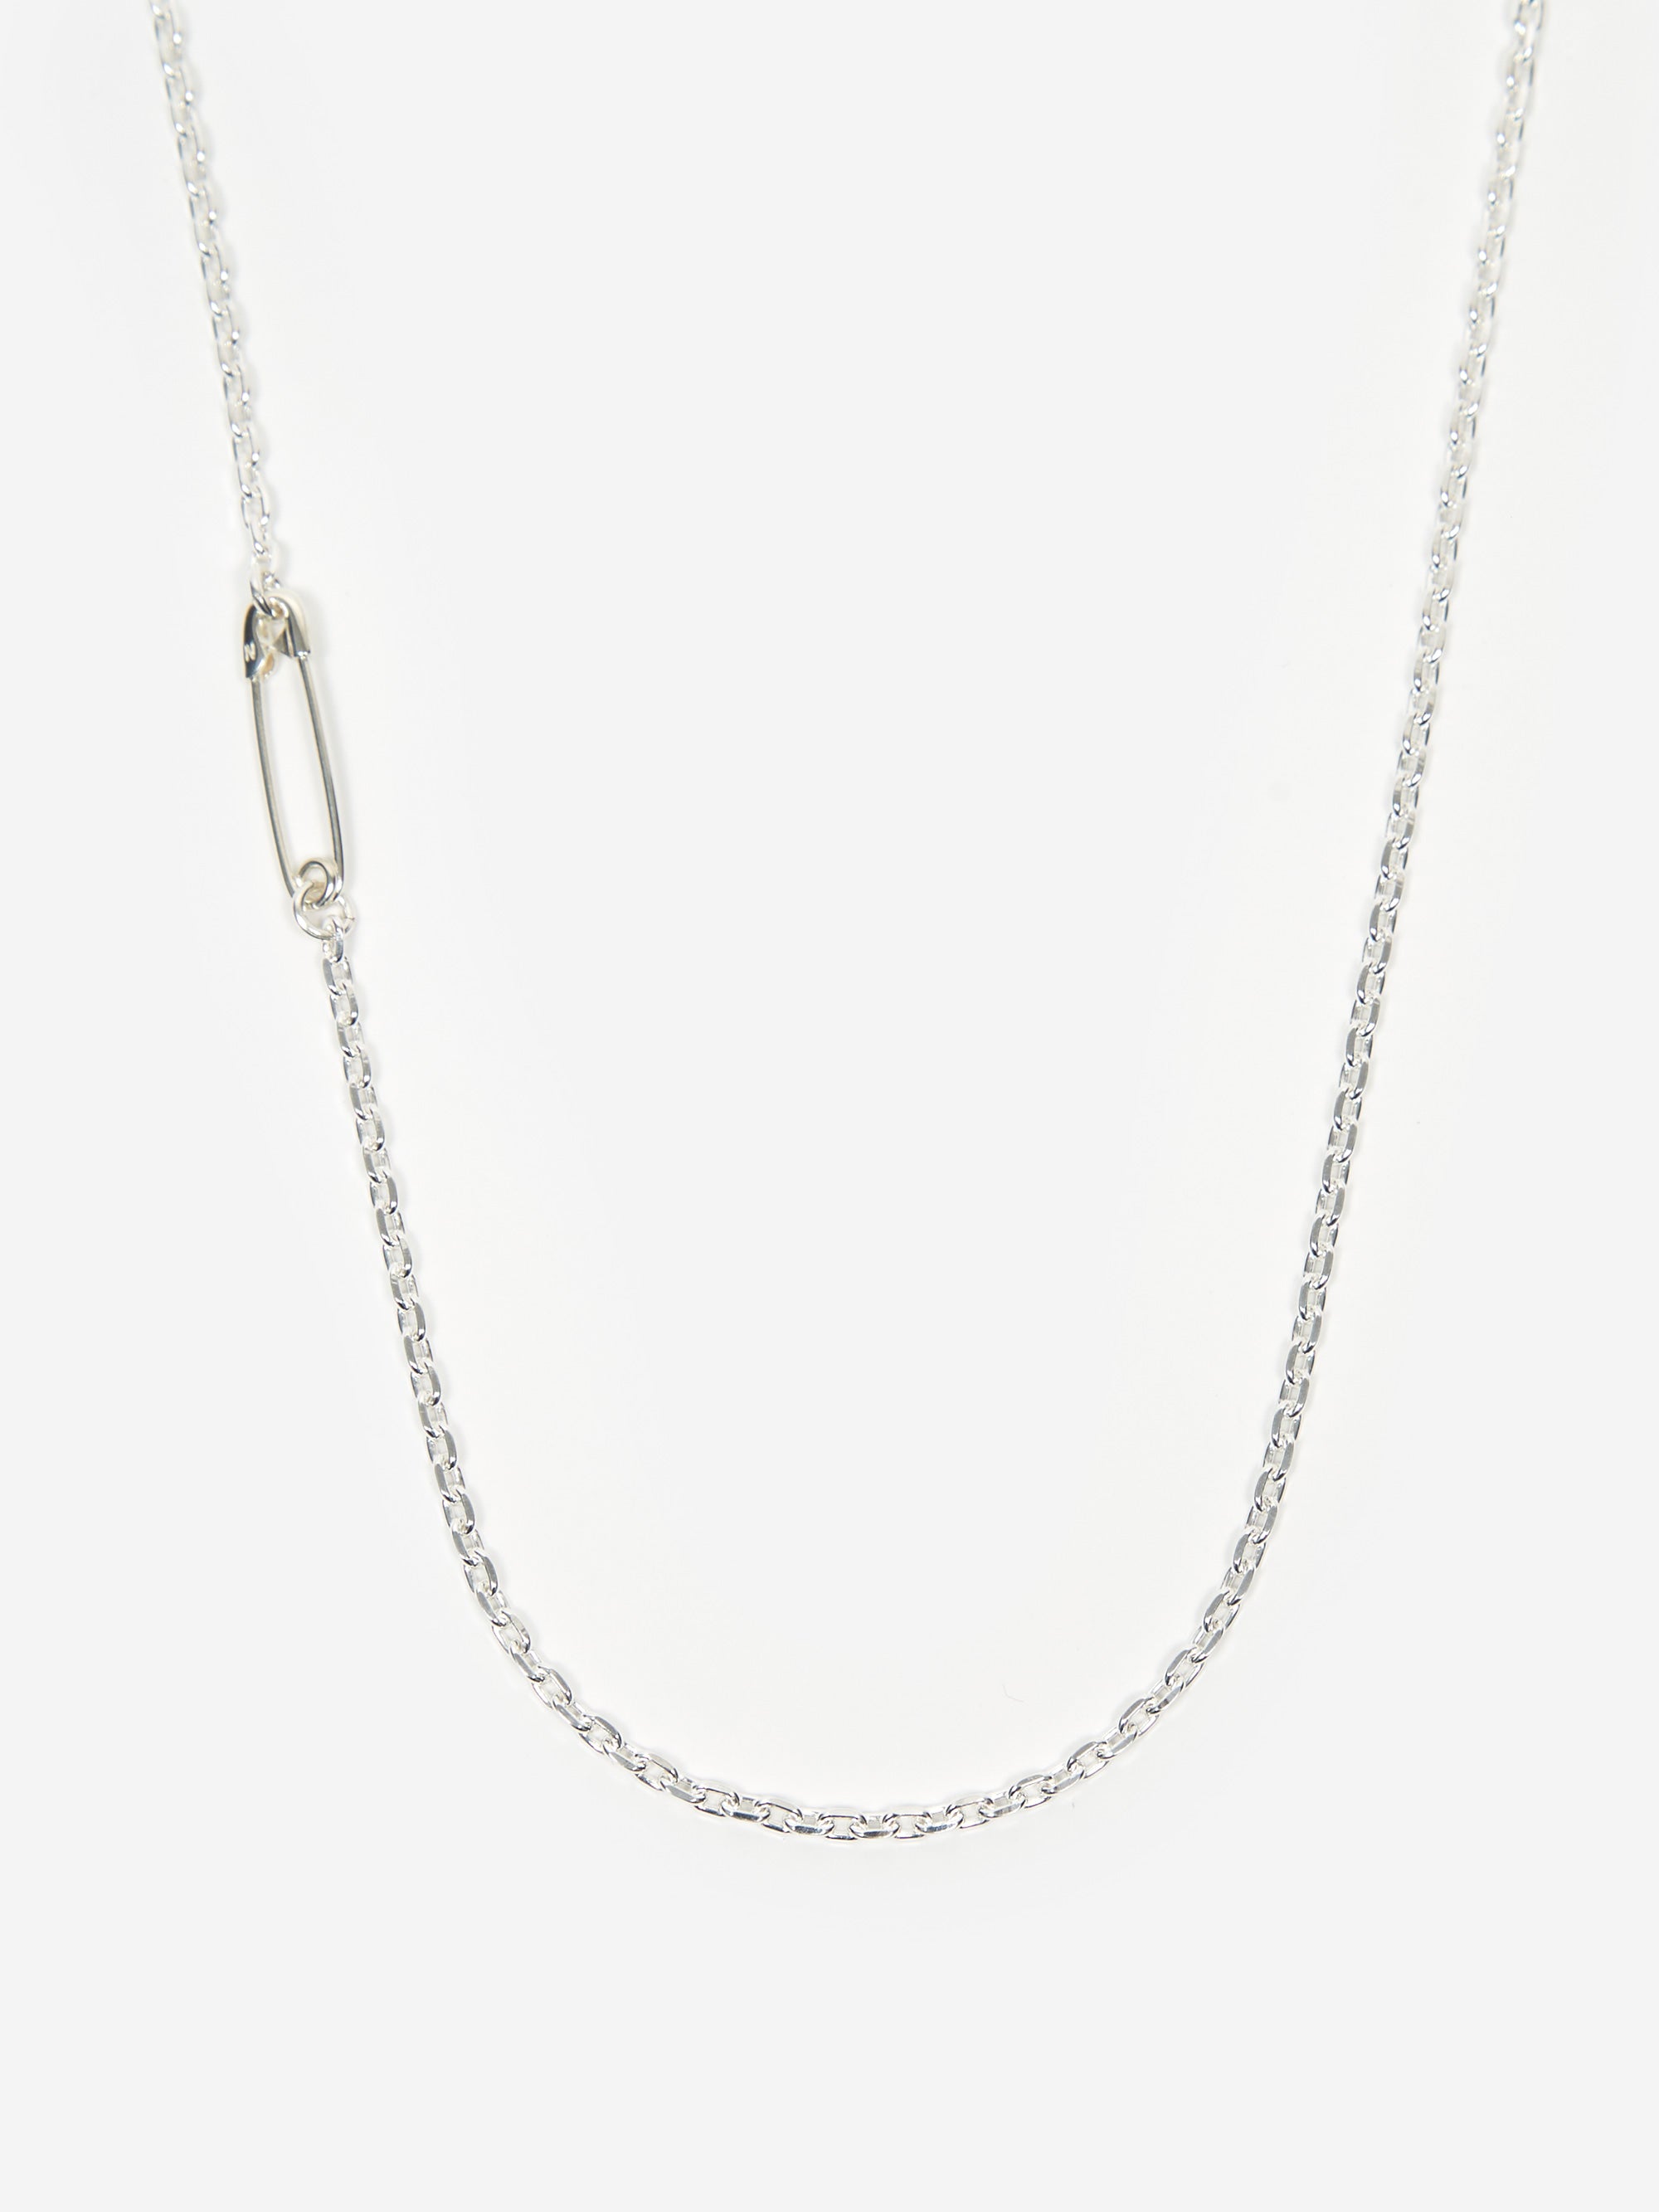 16560円激安 質屋 工場直販 NEIGHBORHOOD silver safety pin necklace